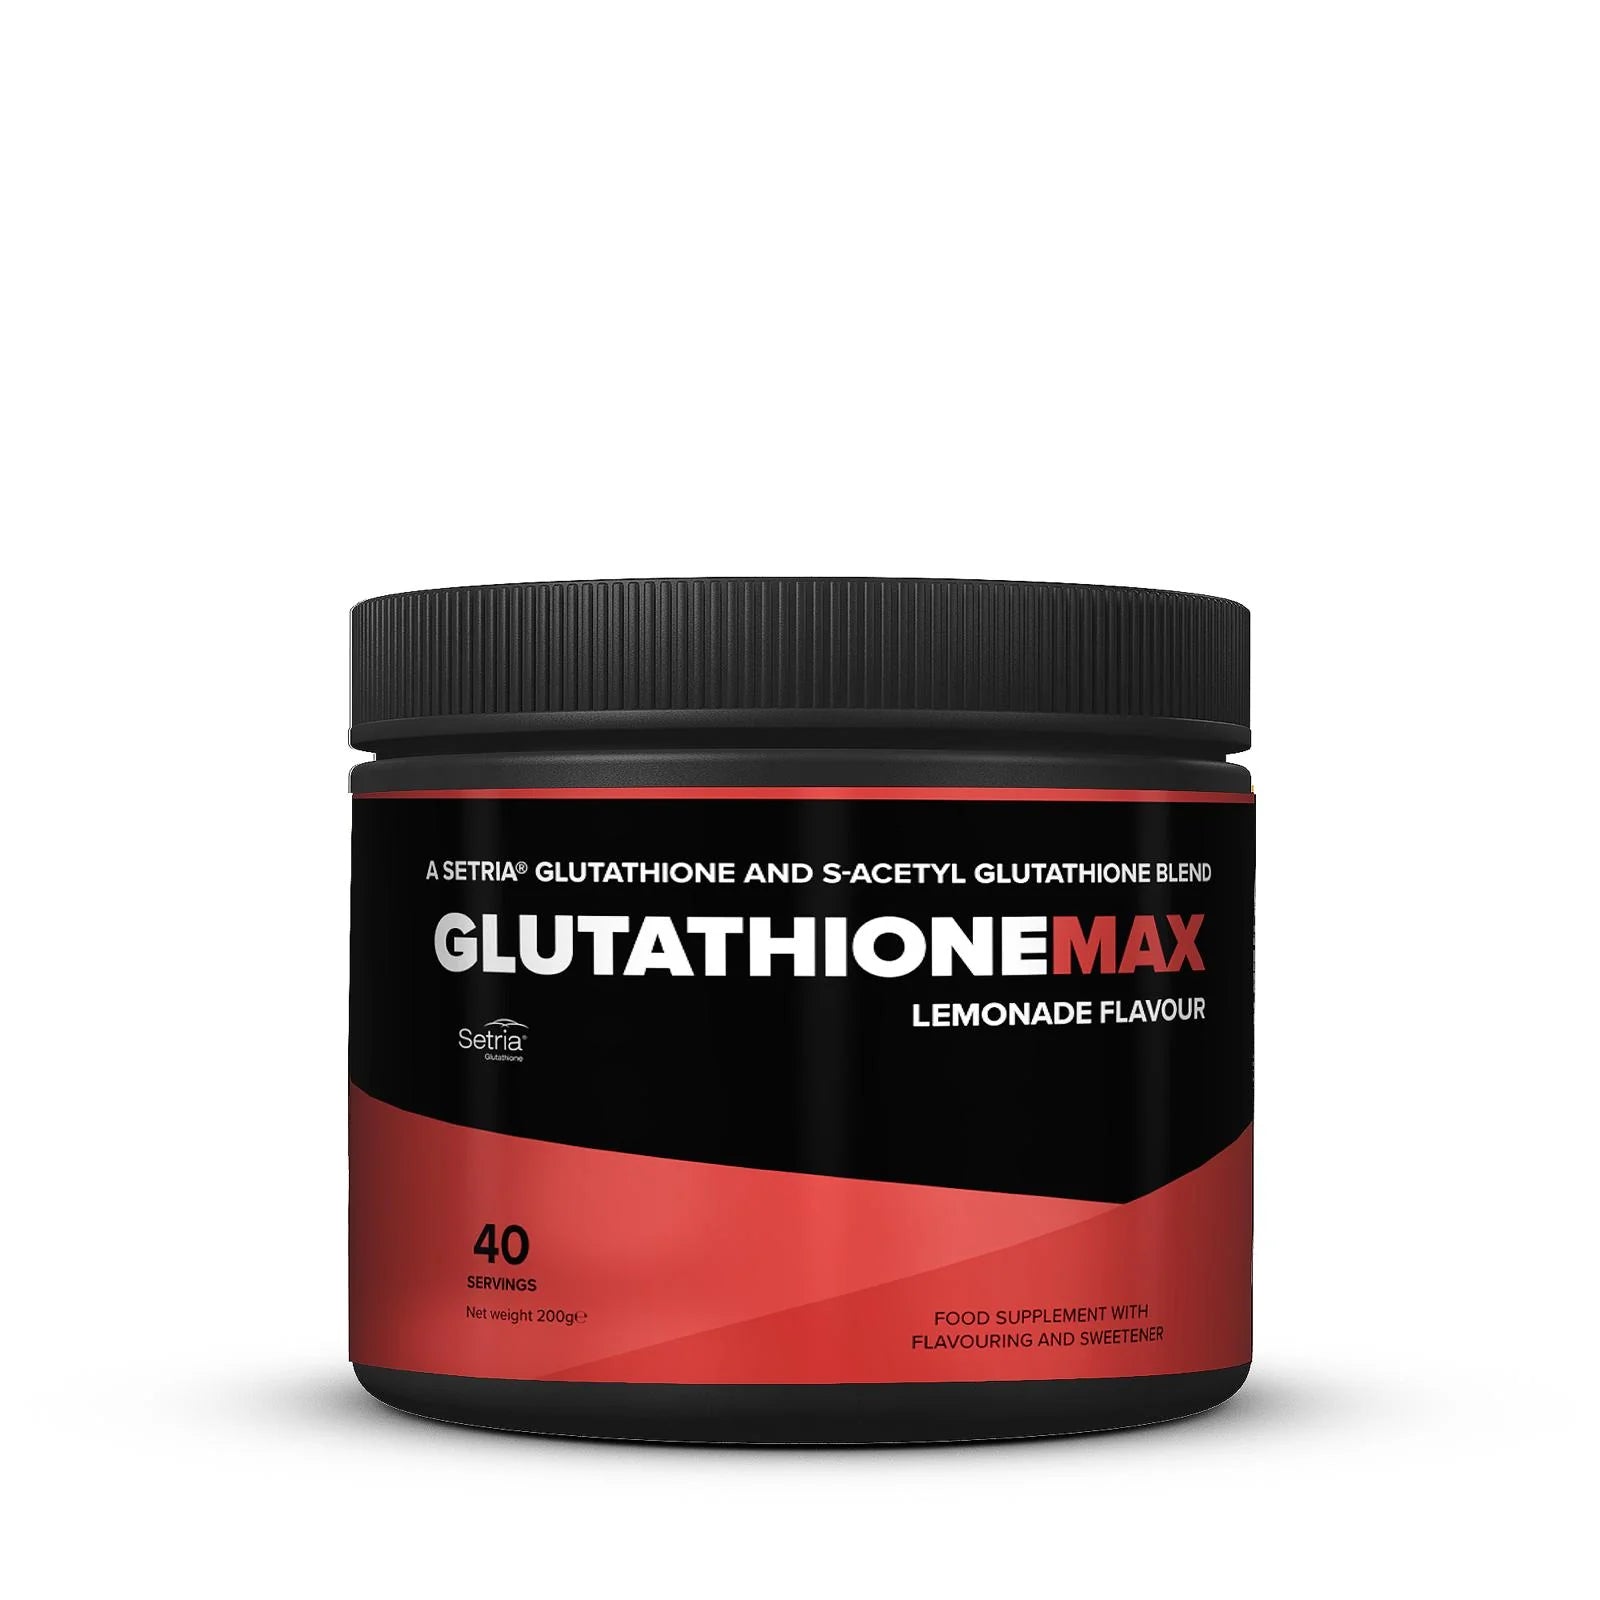 StromSports - Glutathione Max